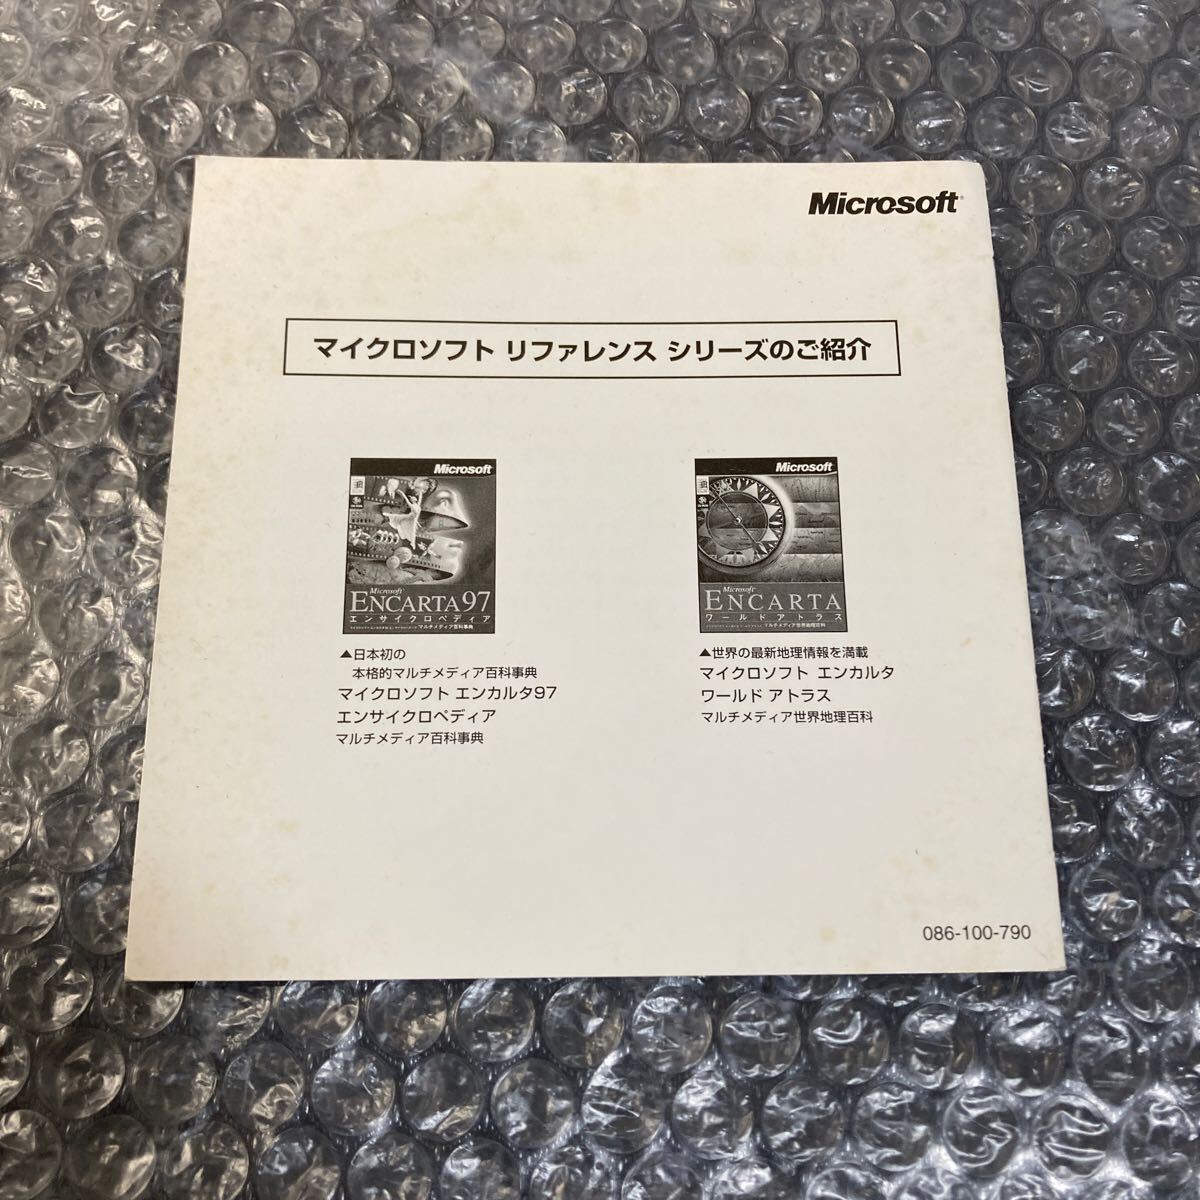 PCソフト Microsoft/Shogakukan Bookshelf Basic マイクロソフト/小学館 ブックシェルフ ベーシック マルチメディア統合辞典